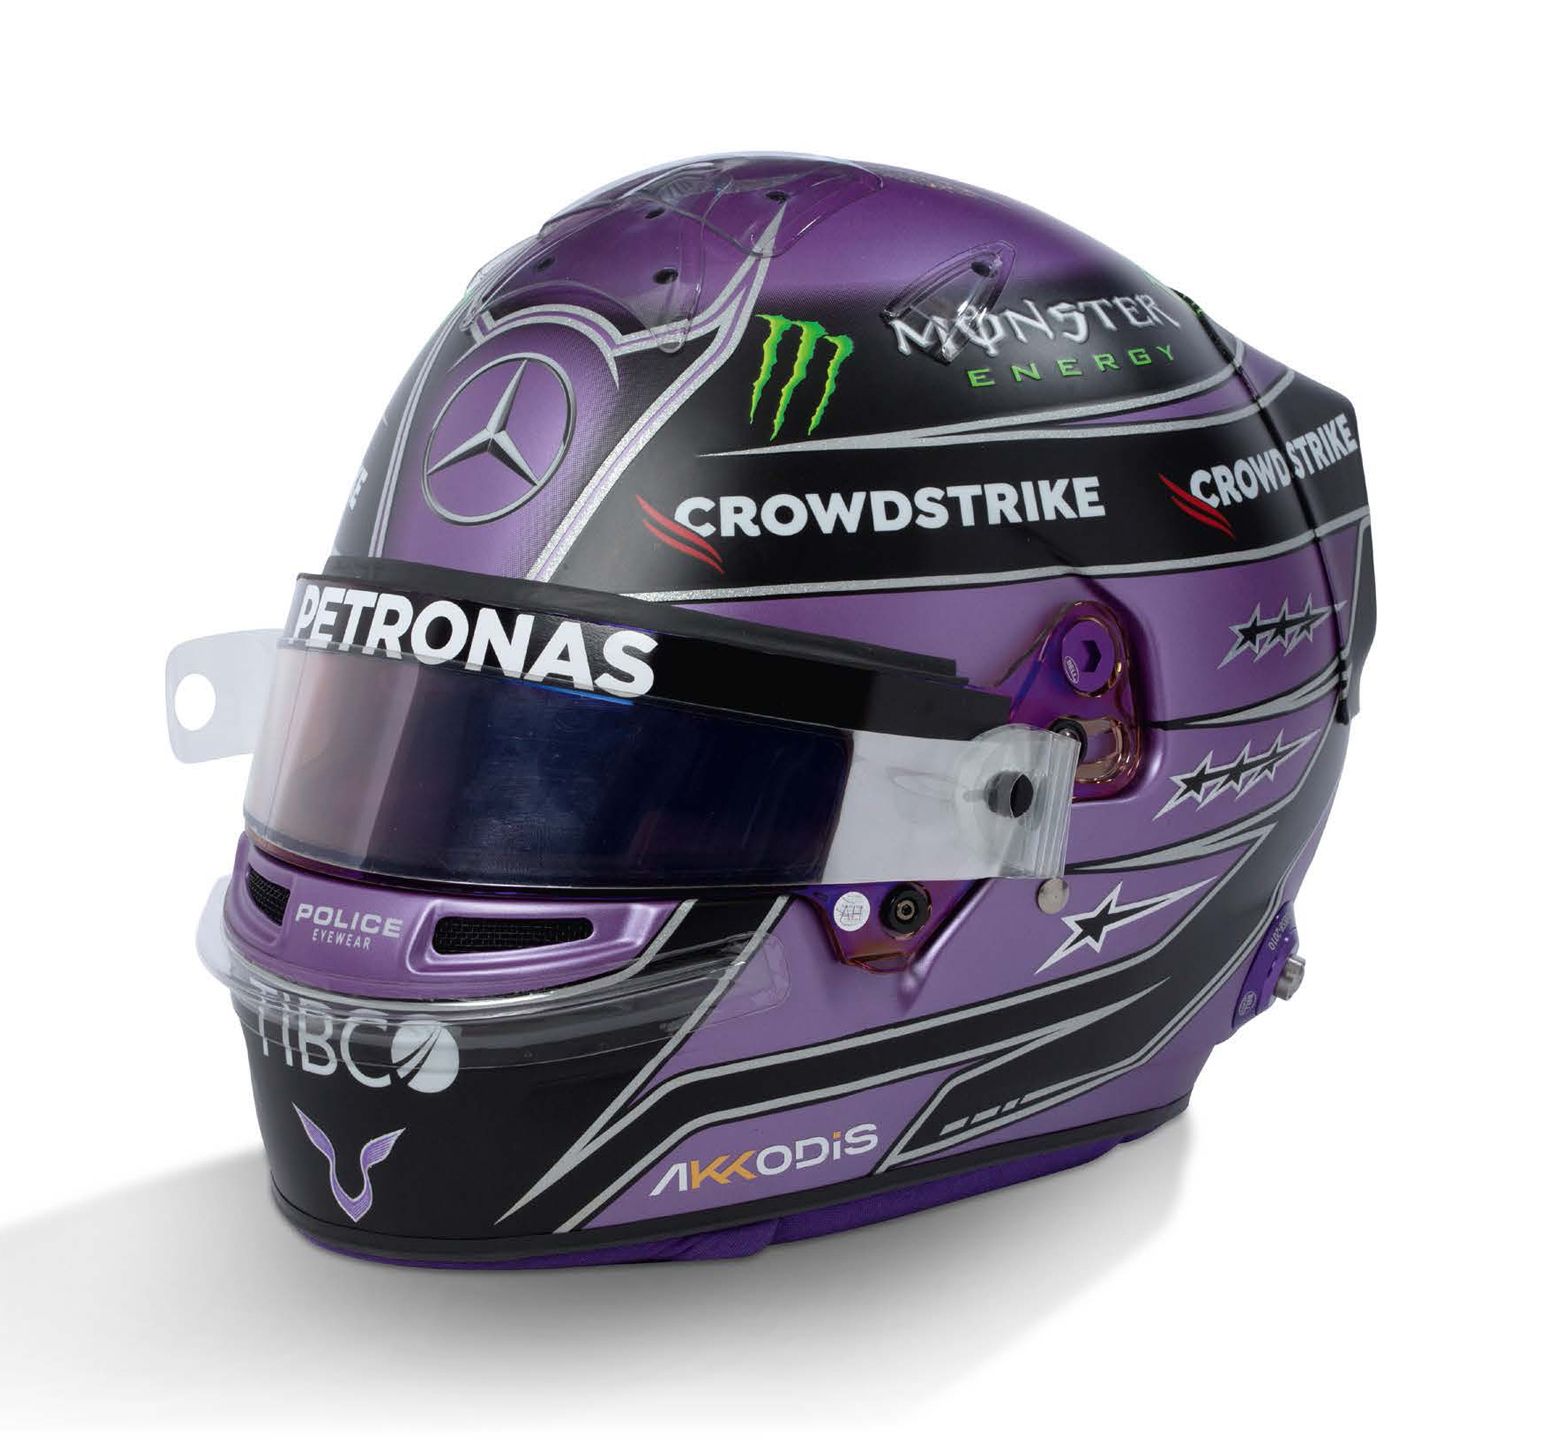 LEWIS HAMILTON Mercedes - 2021 Rare helmet of seven-time world champion
Lewis Ha&hellip;